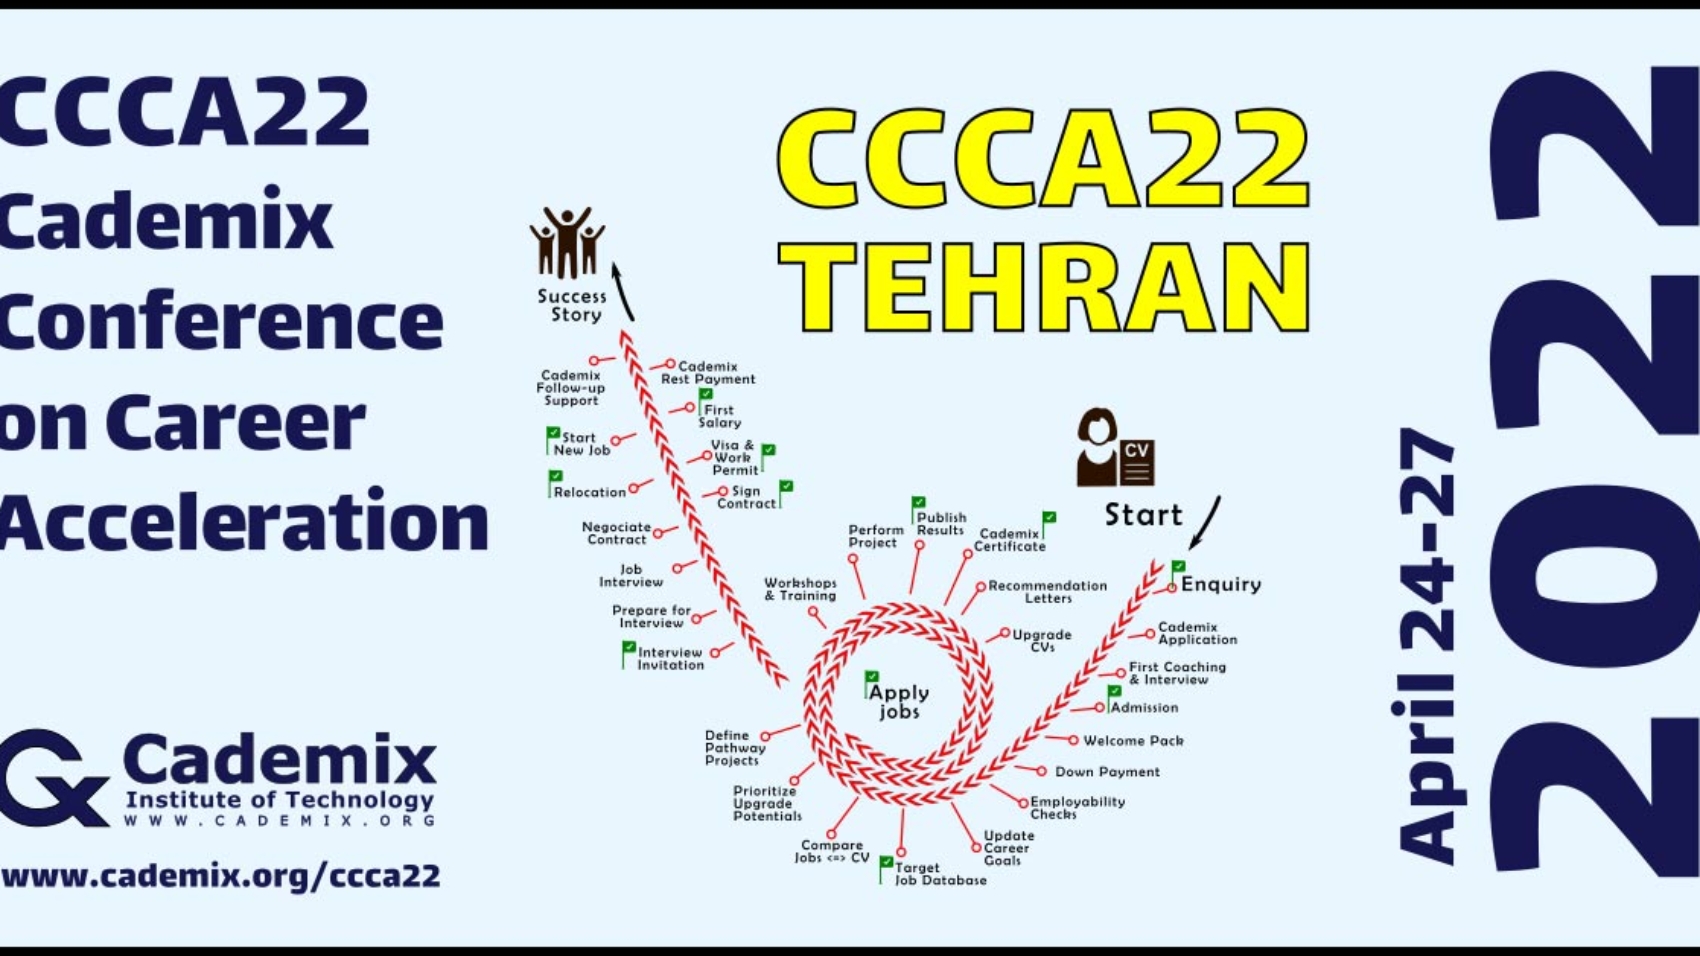 CCCA22 Cademix Conference on Career Acceleration Iran Tehran 2022 Poster